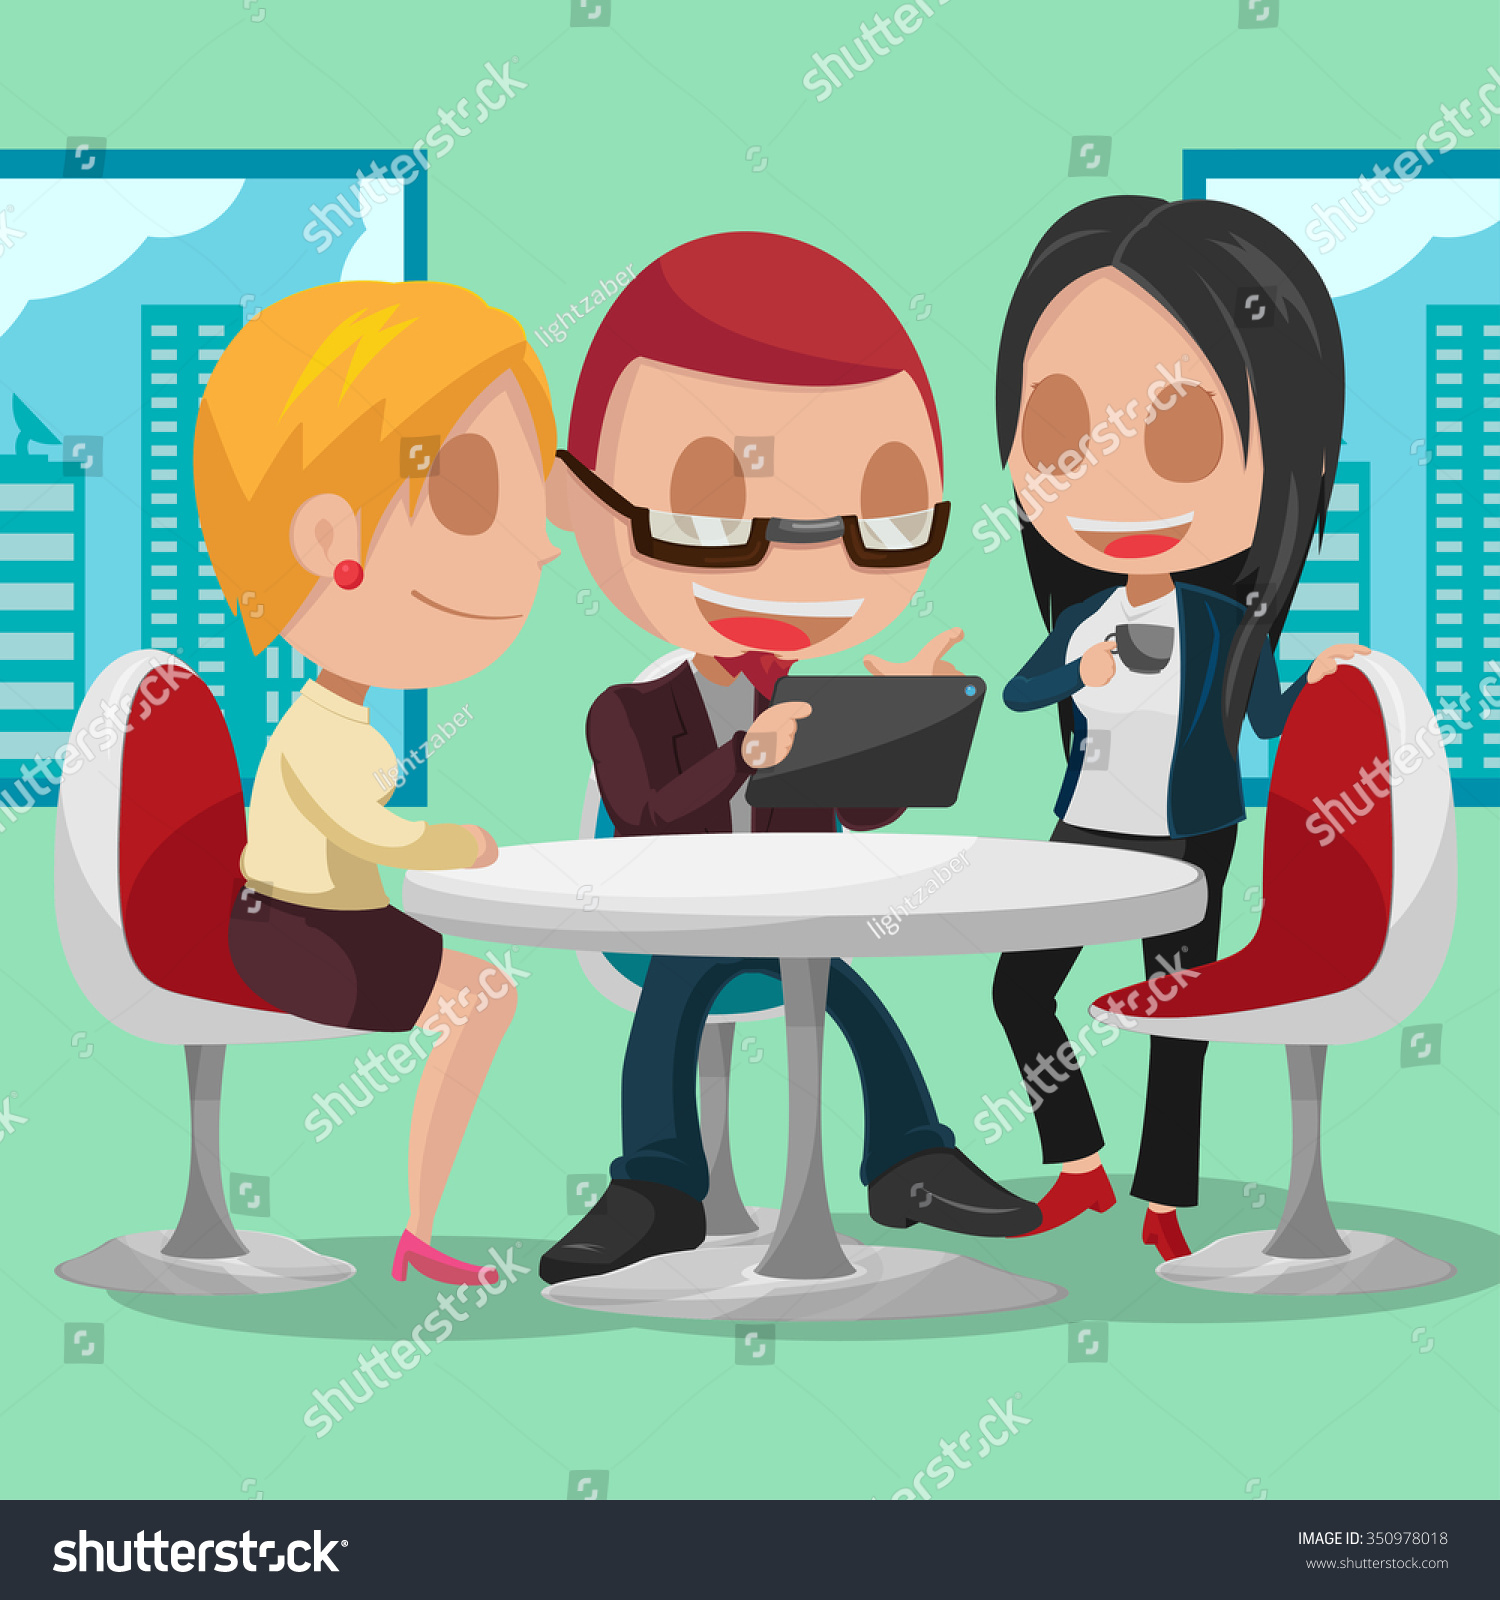 Business Group Cartoon Character Meeting Vector Stock Vector 350978018 ...